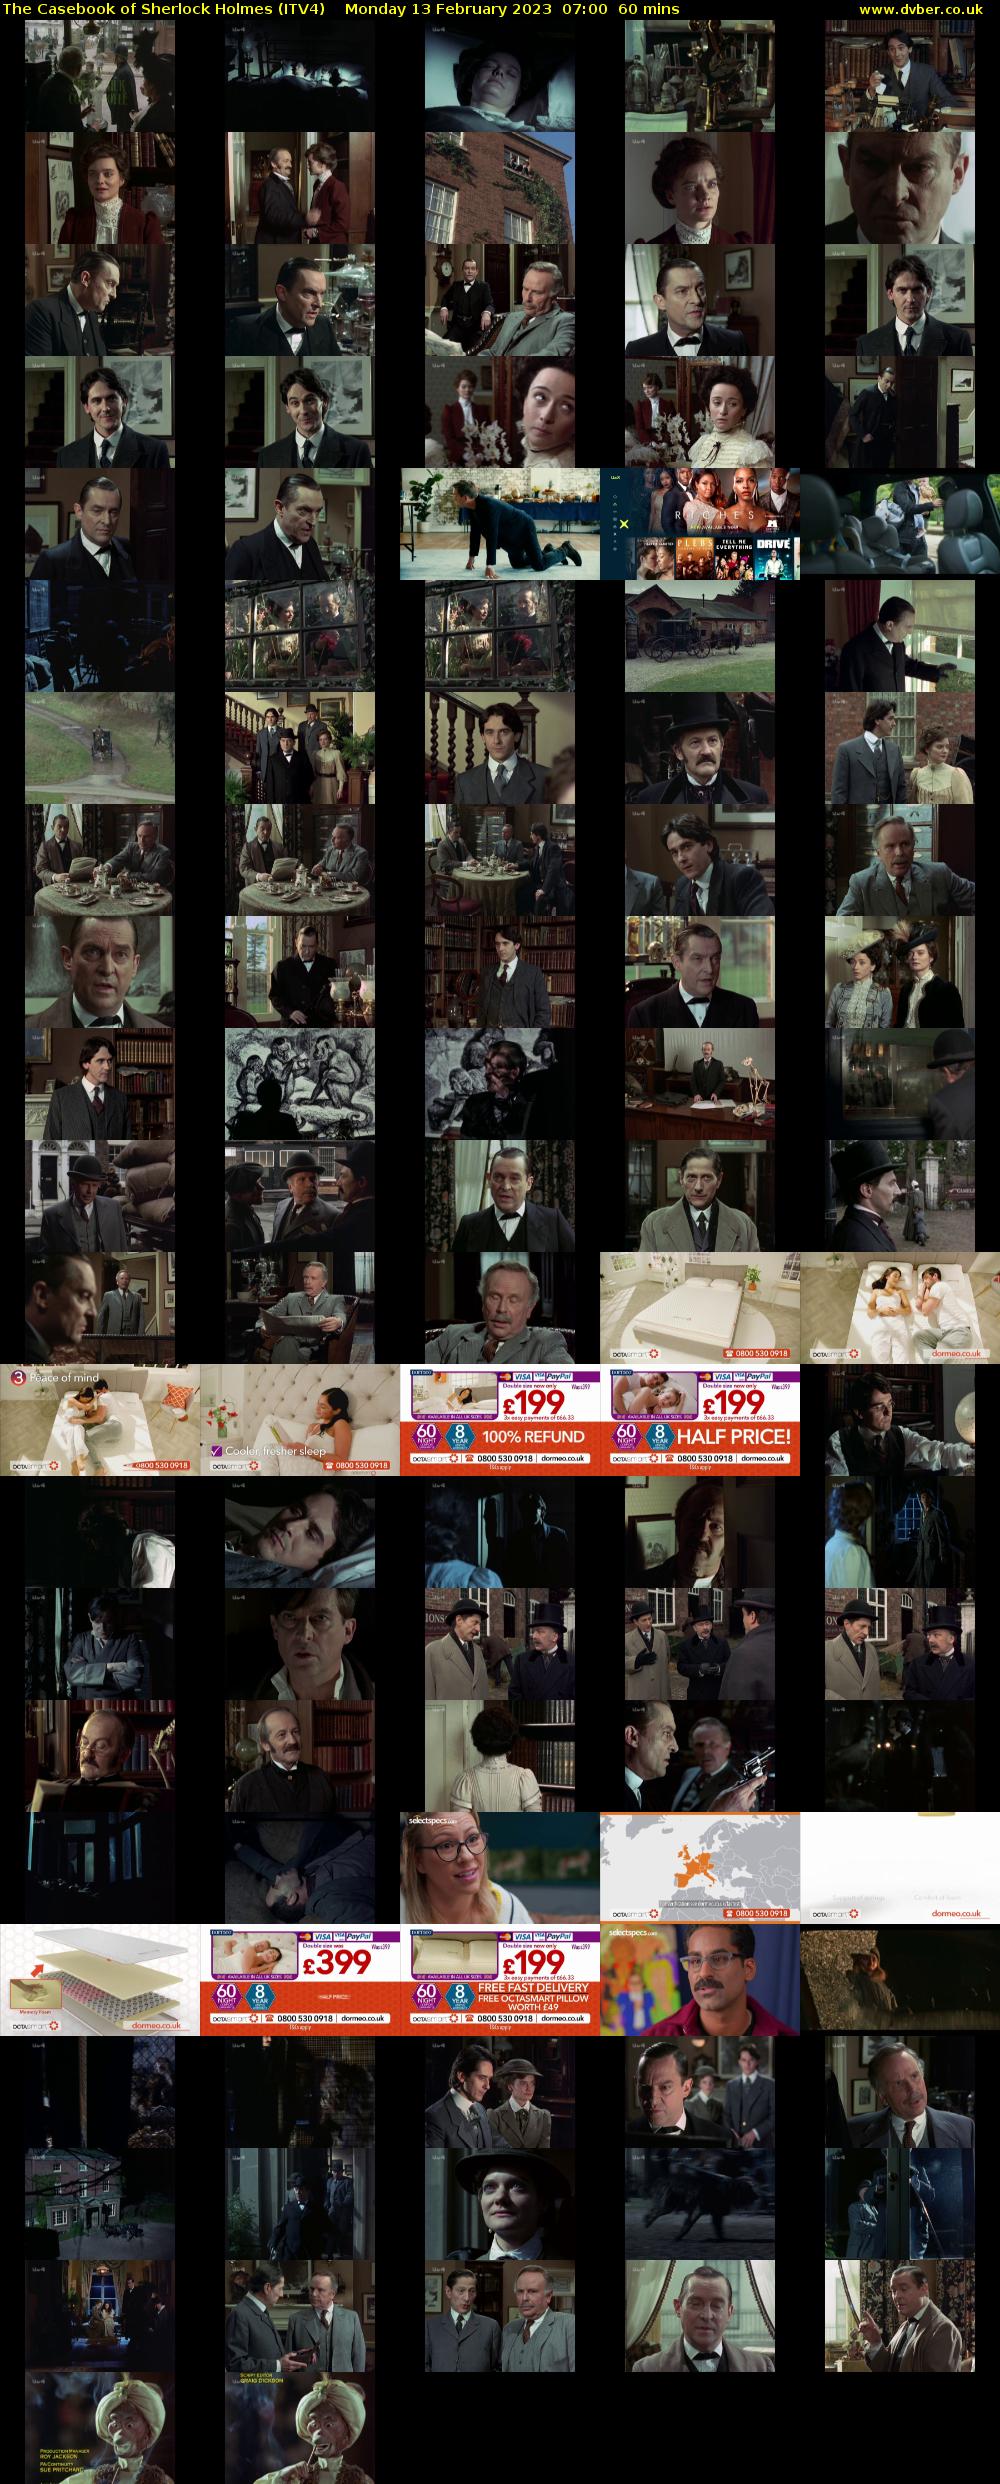 The Casebook of Sherlock Holmes (ITV4) Monday 13 February 2023 07:00 - 08:00